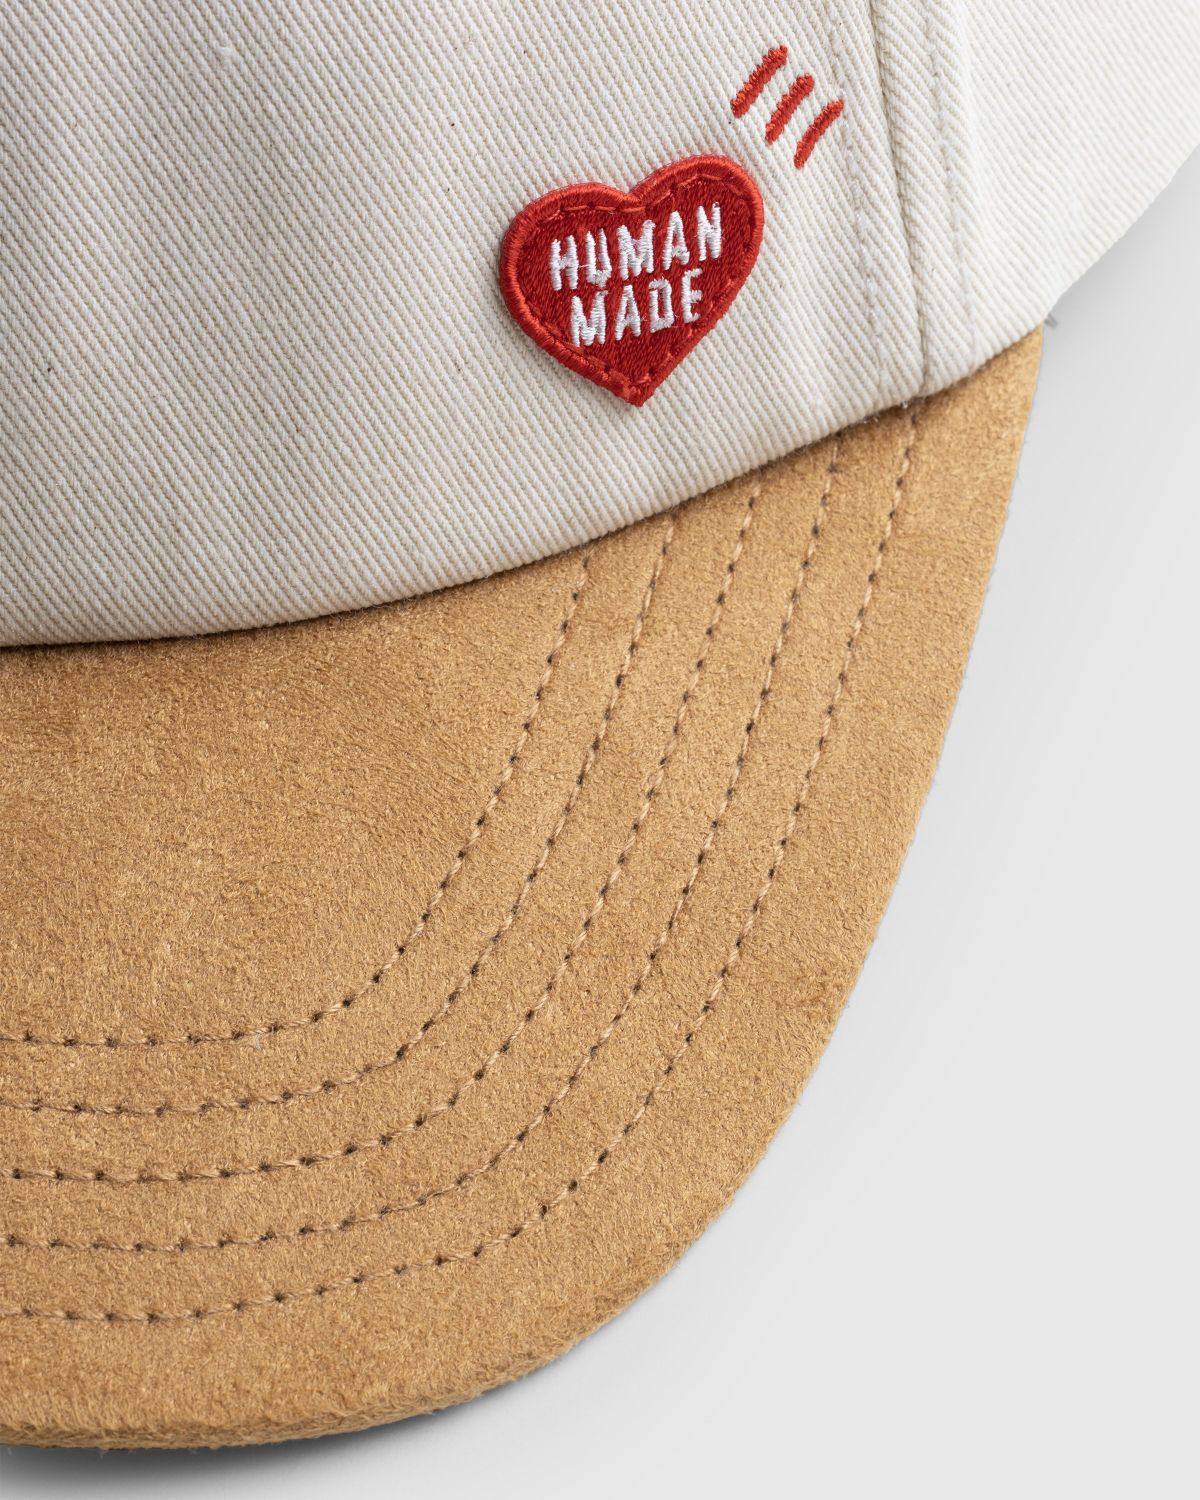 Human Made – 6-Panel Twill Cap White | Highsnobiety Shop